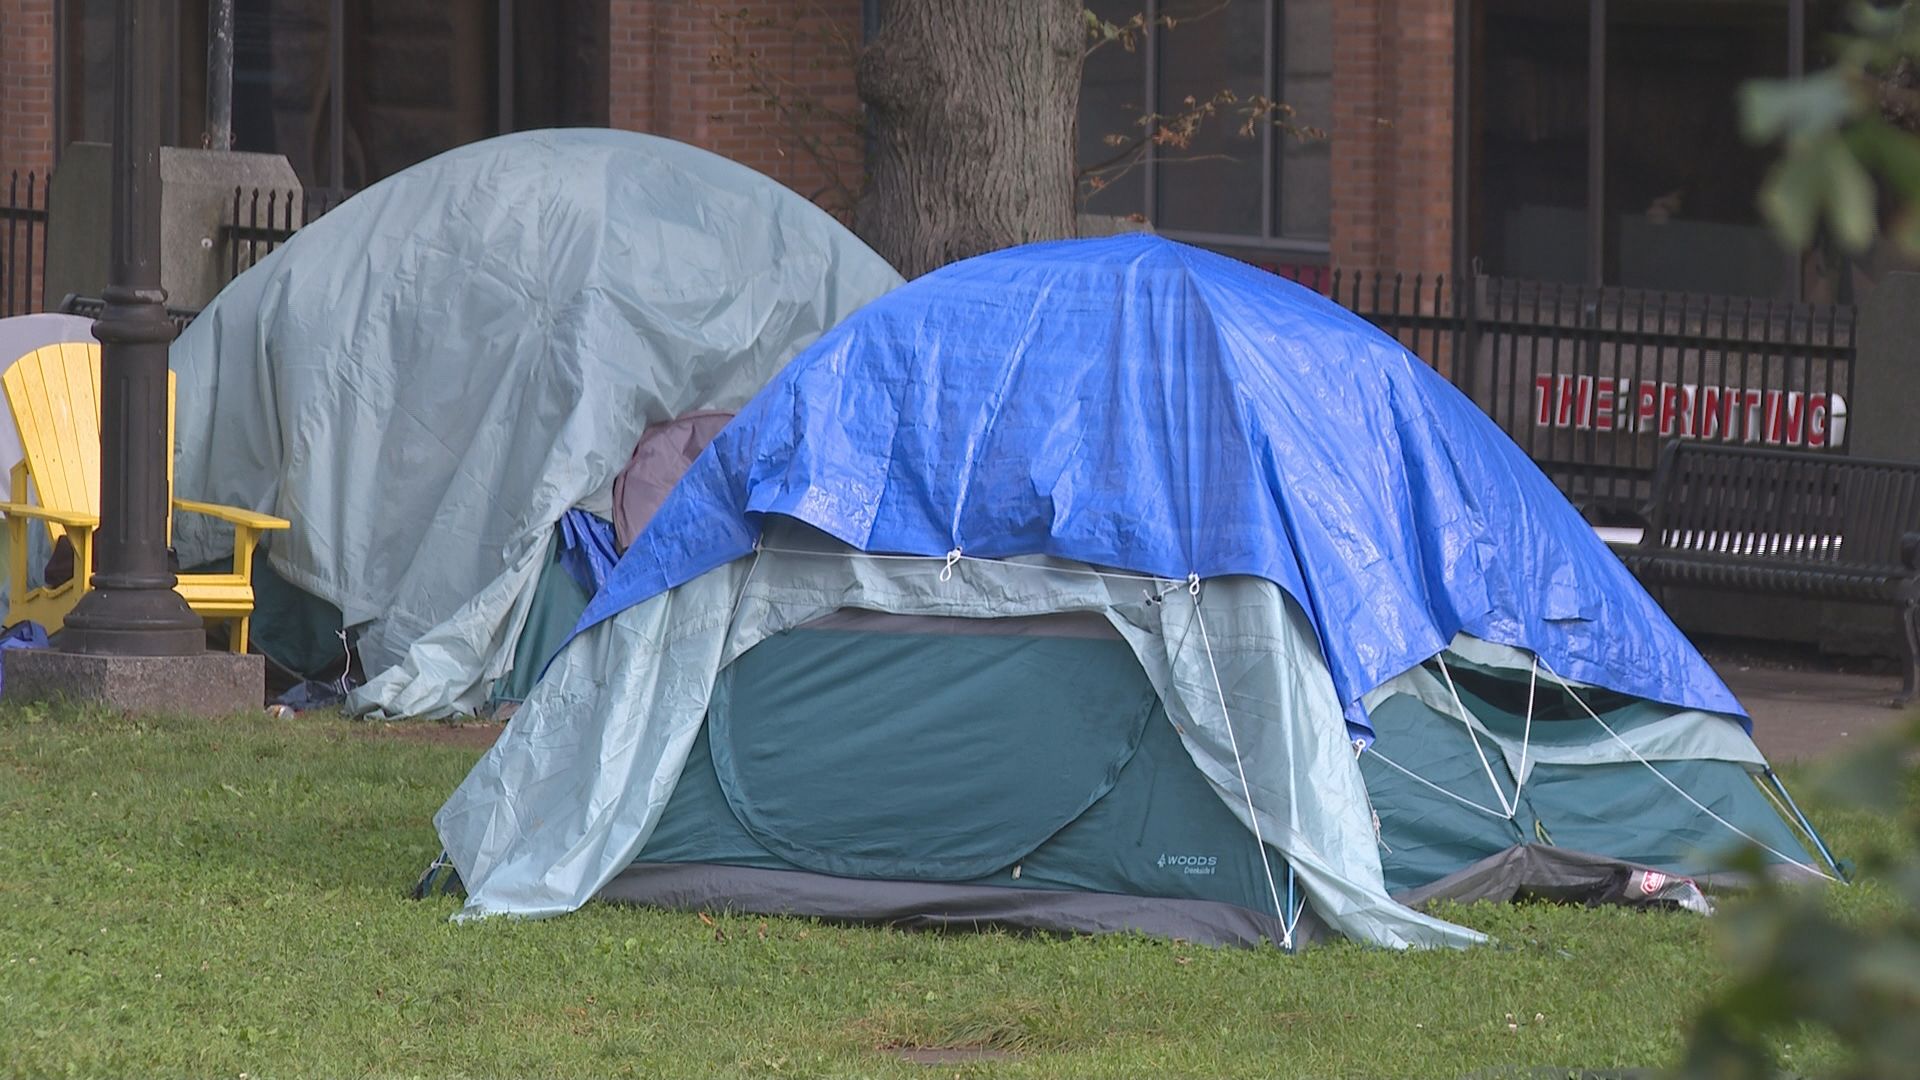 Halifax designating more tent encampment sites to help homeless population